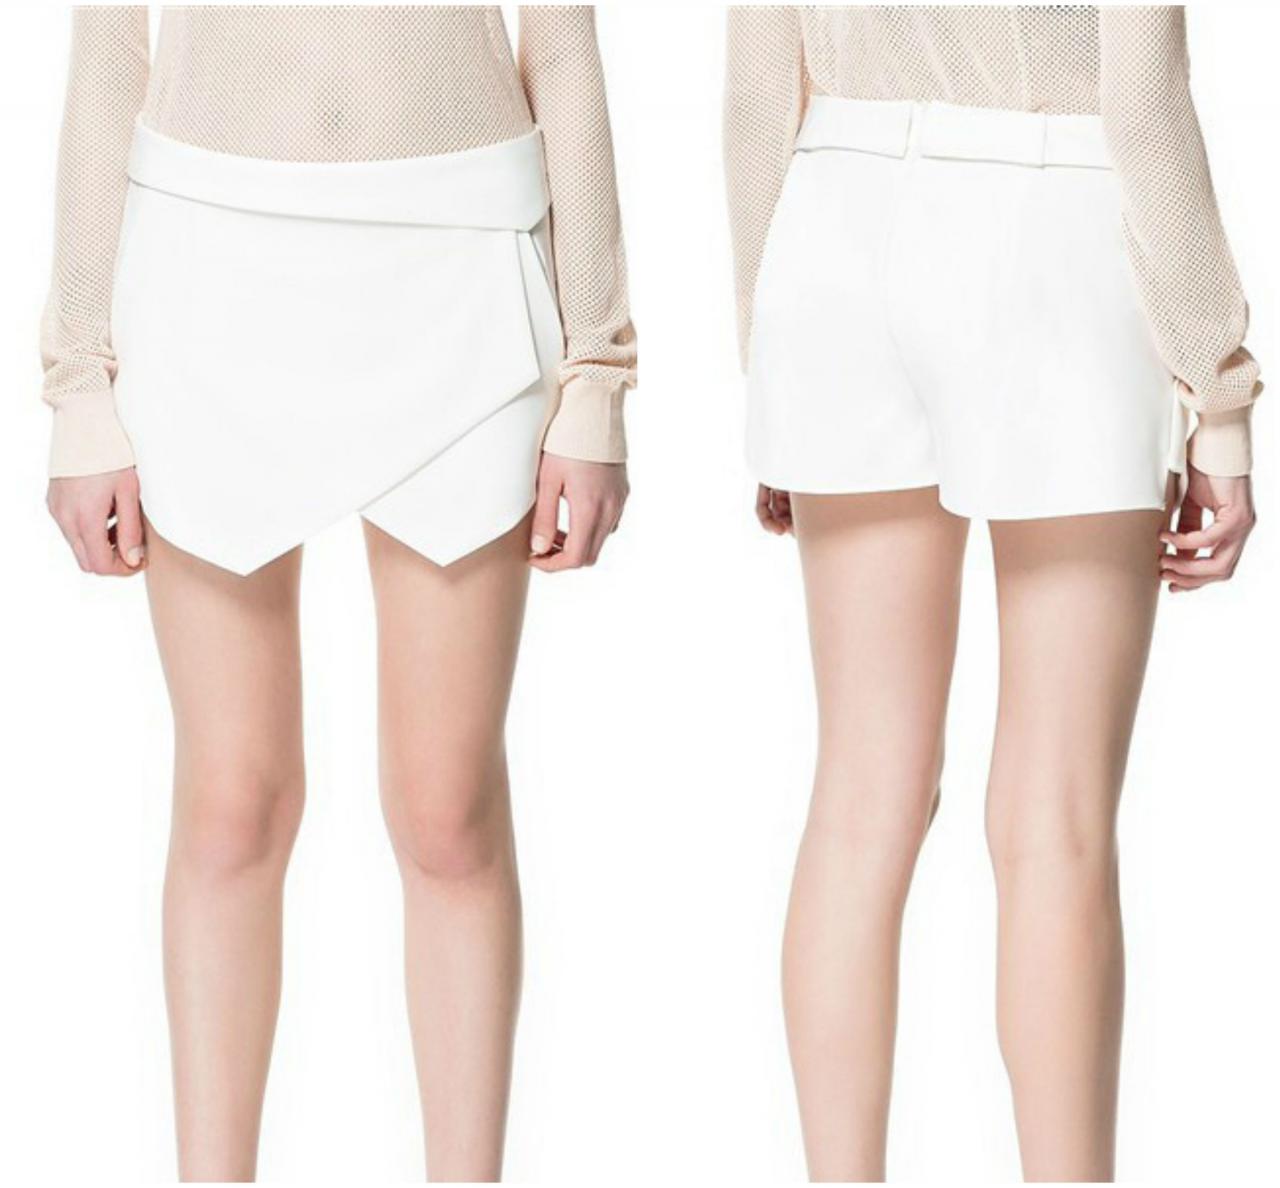 Chic Solid White Cotton Fashion Shorts